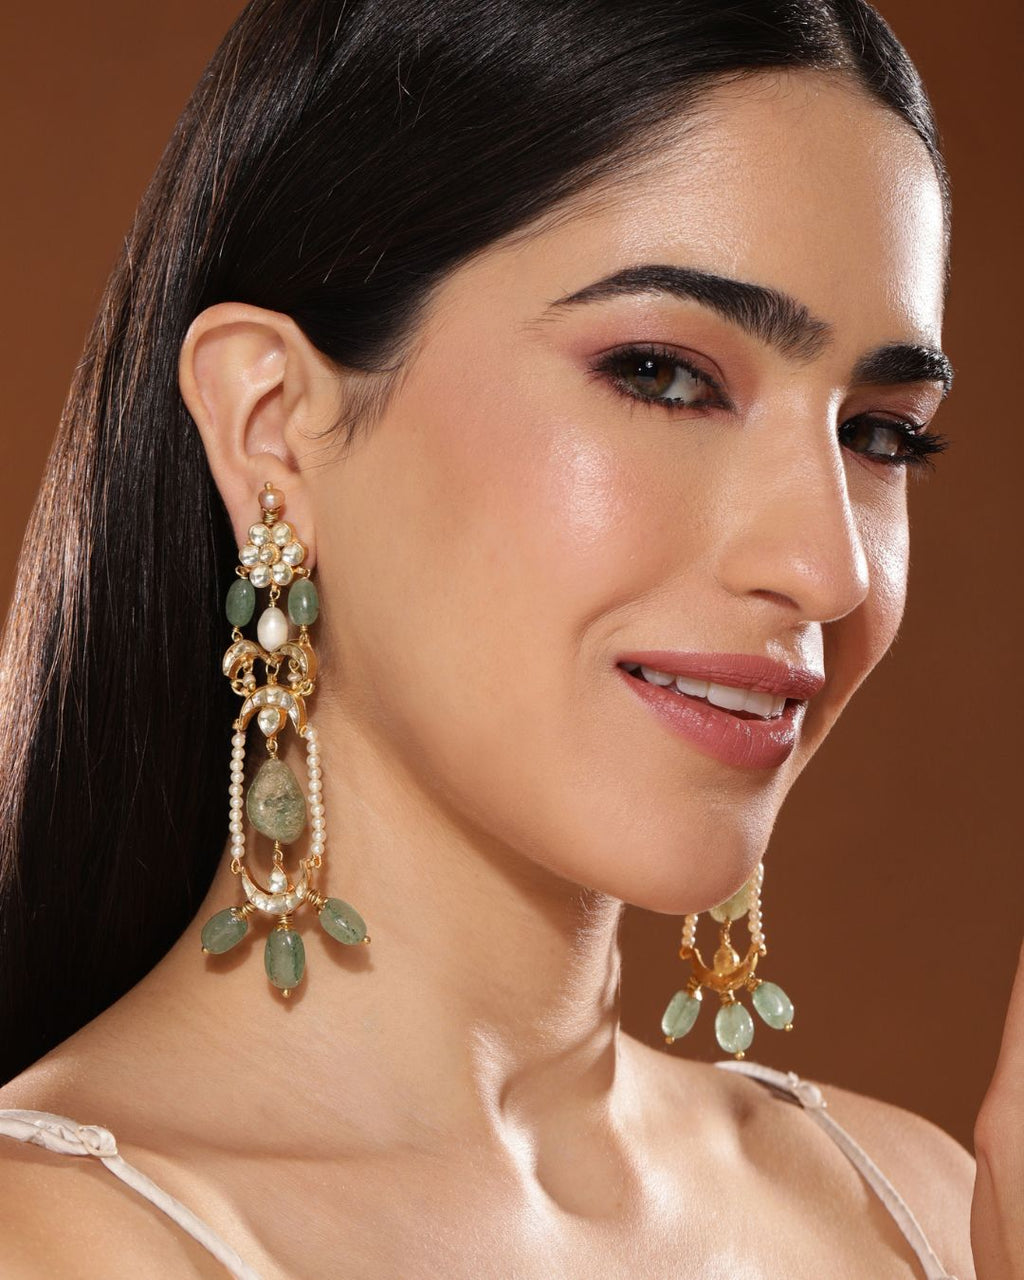 Hecate Ardh Chaandi Earrings Handcrafted Jewellery - Made in India - Dubai Jewellery, Fashion & Lifestyle - Dori